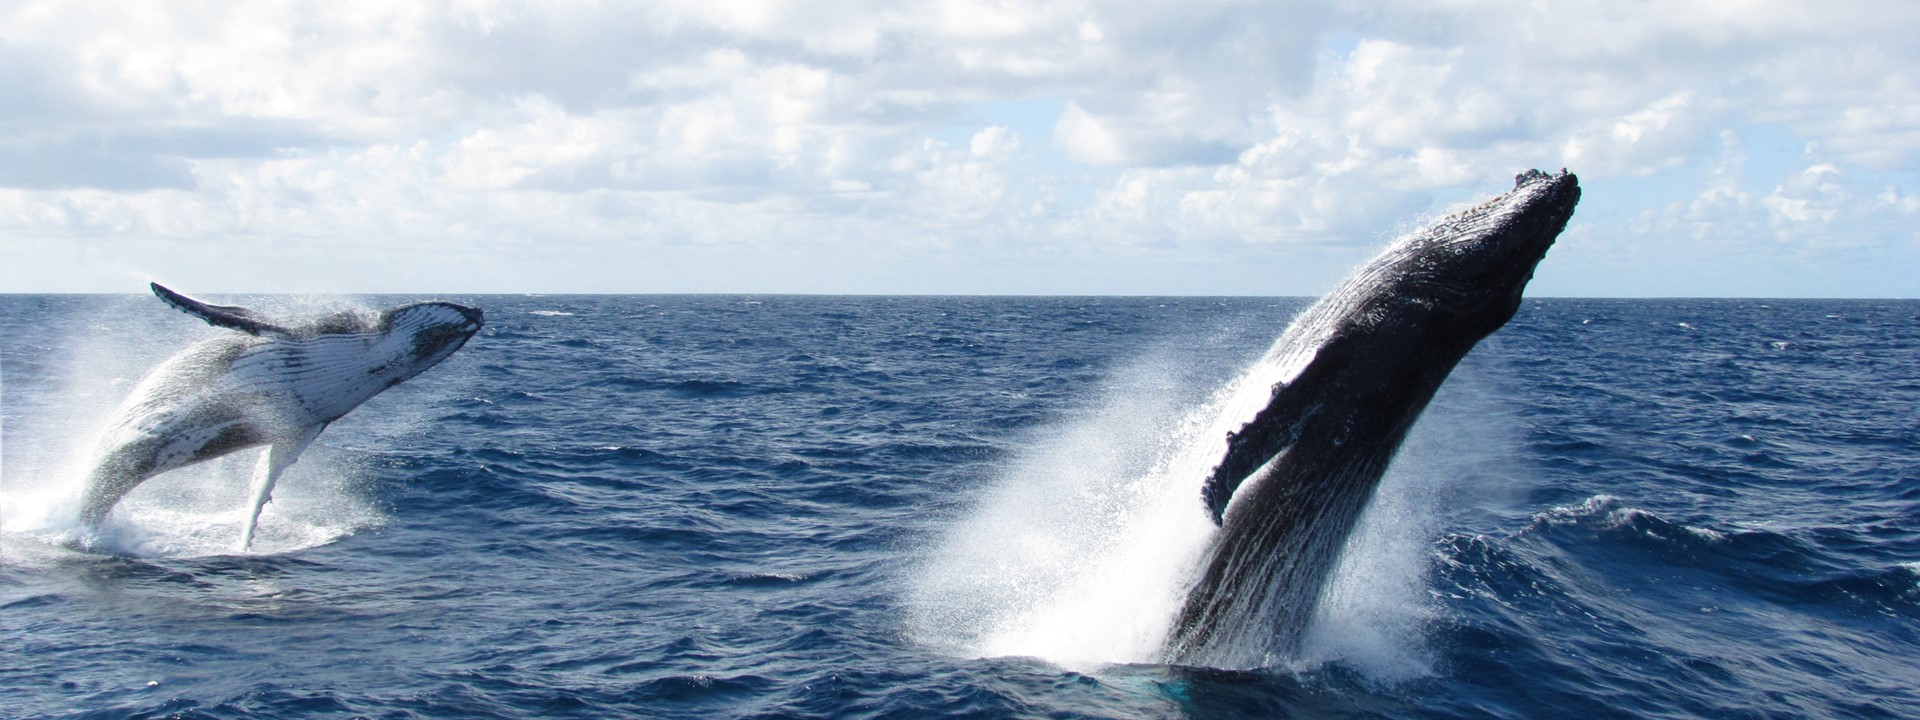 Humpback Whale Double Breach